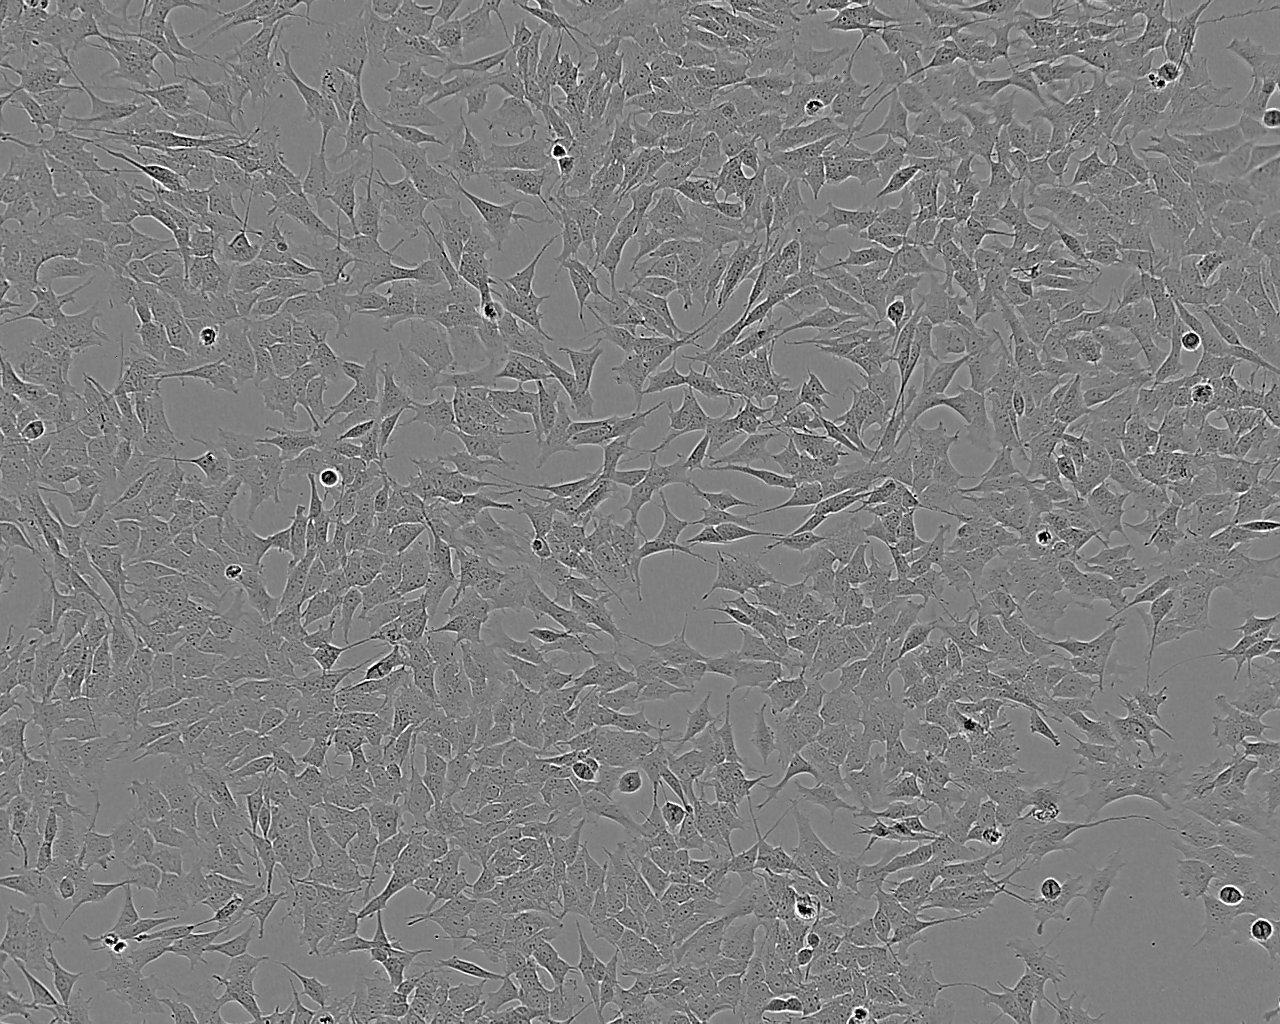 EC-GI-10 cell line人食管鳞状细胞癌细胞系,EC-GI-10 cell line